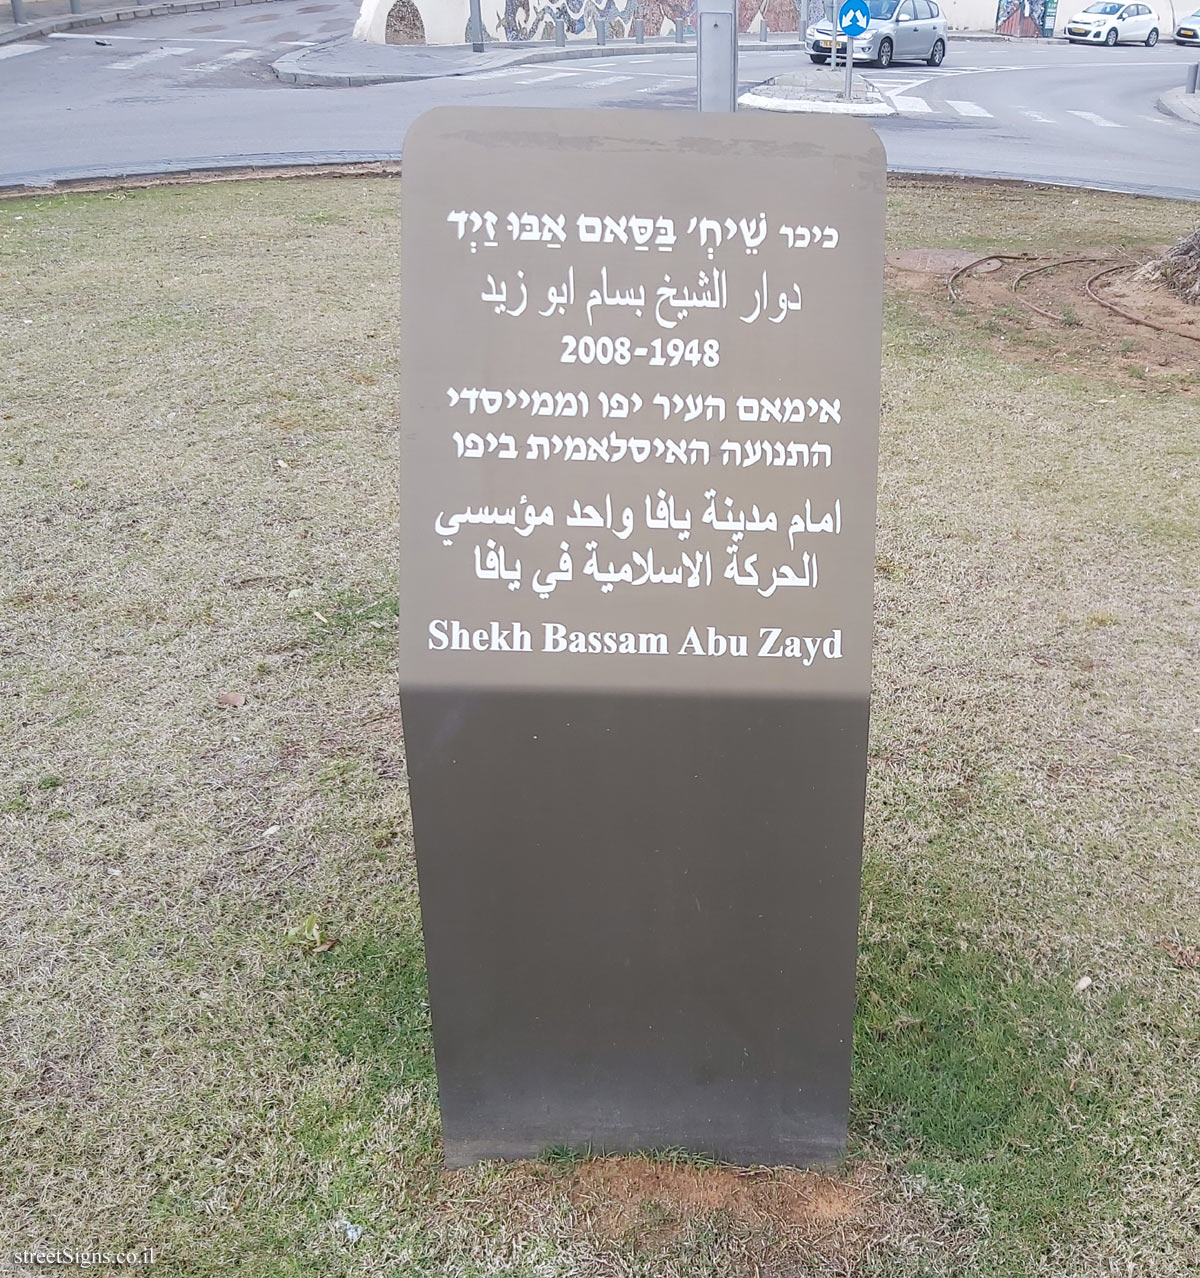 Tel Aviv - Shekh Bassam Abu Zayd Square